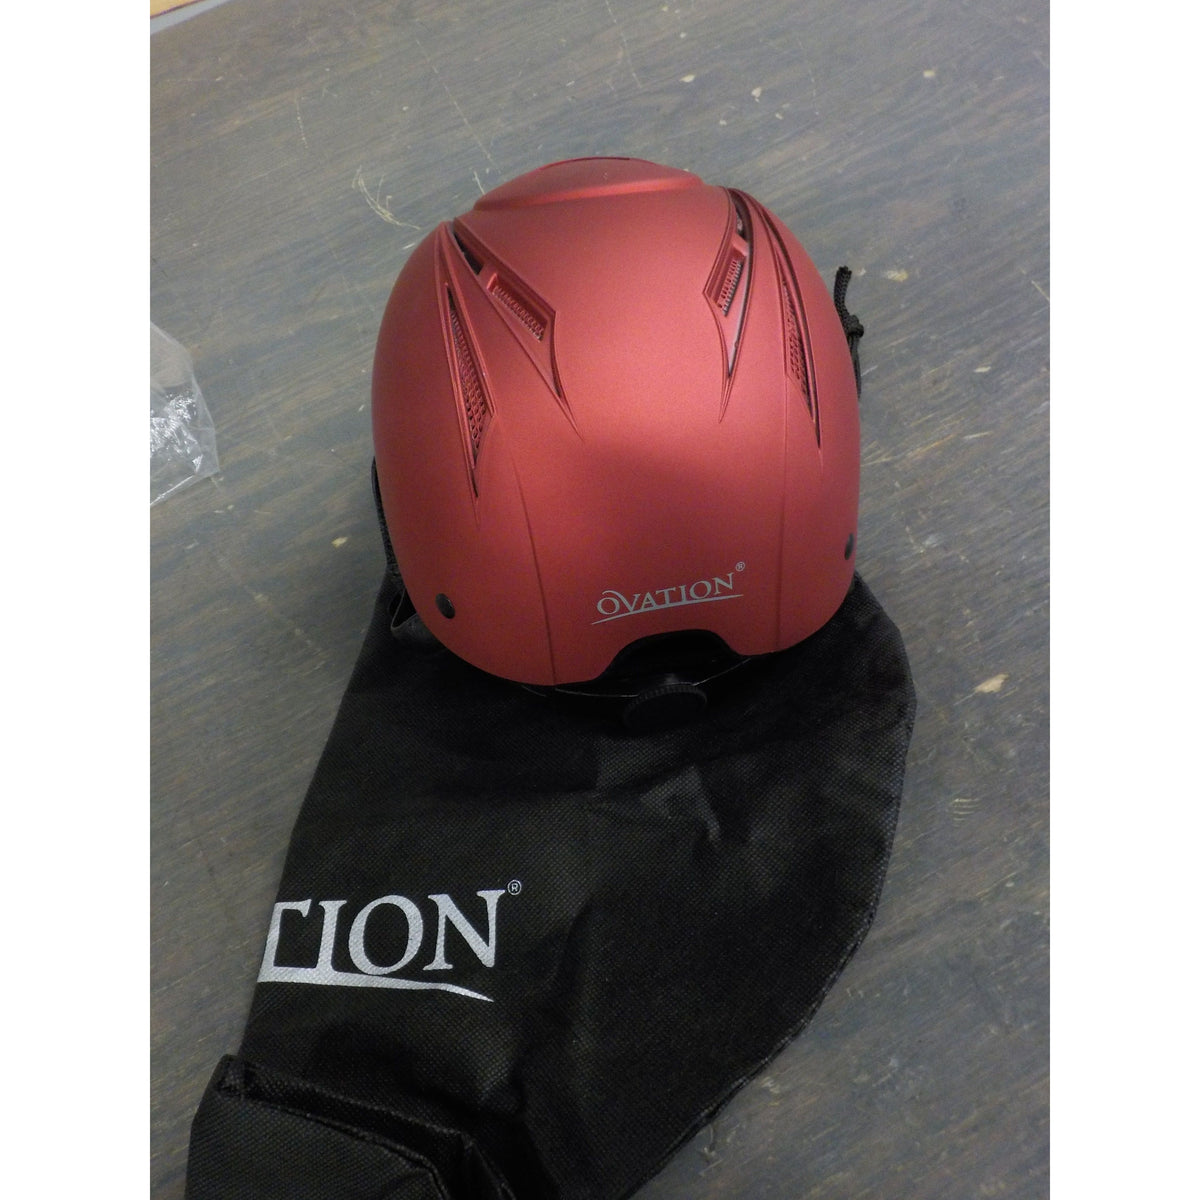 Ovation Metallic Schooler Helmet - Red - X-Small/Small - Used - Acceptable